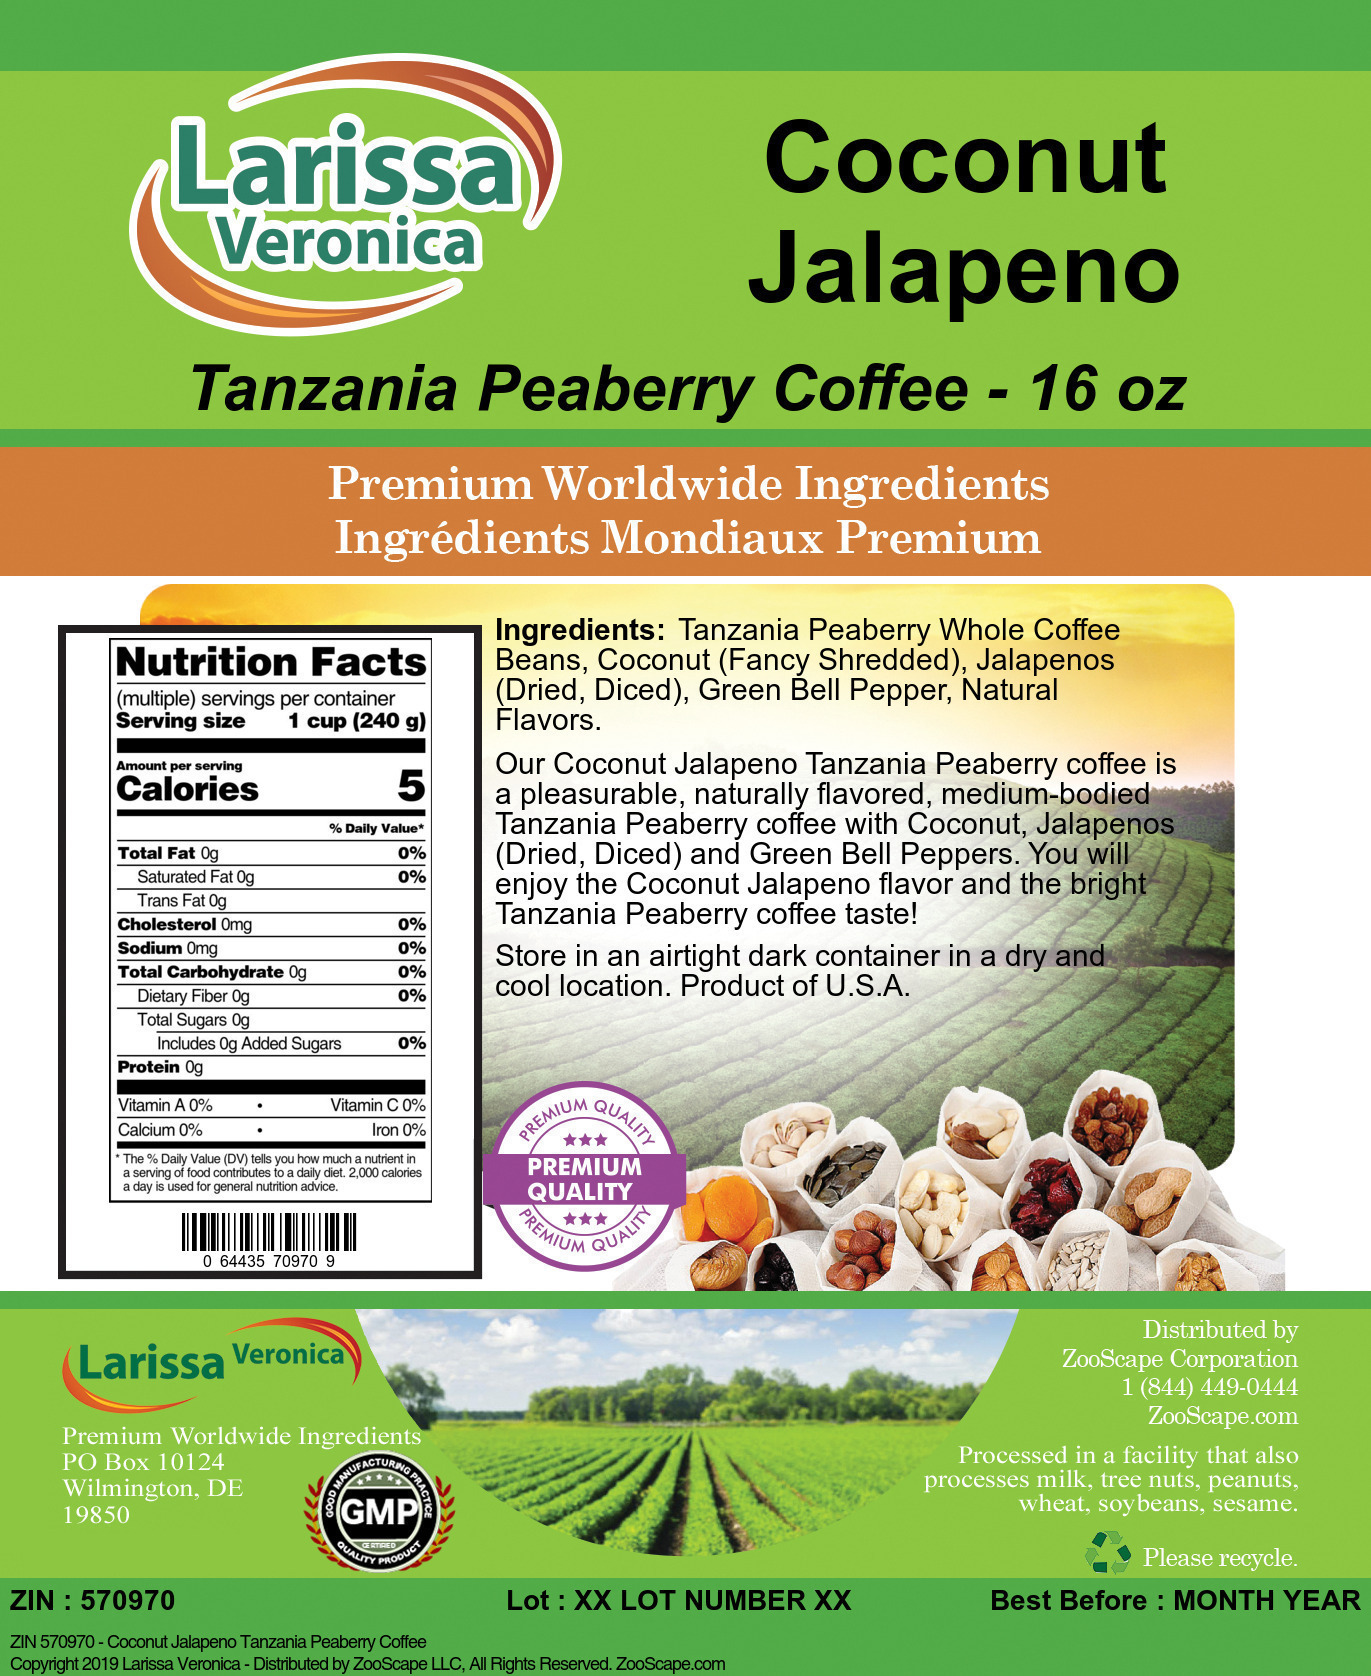 Coconut Jalapeno Tanzania Peaberry Coffee - Label